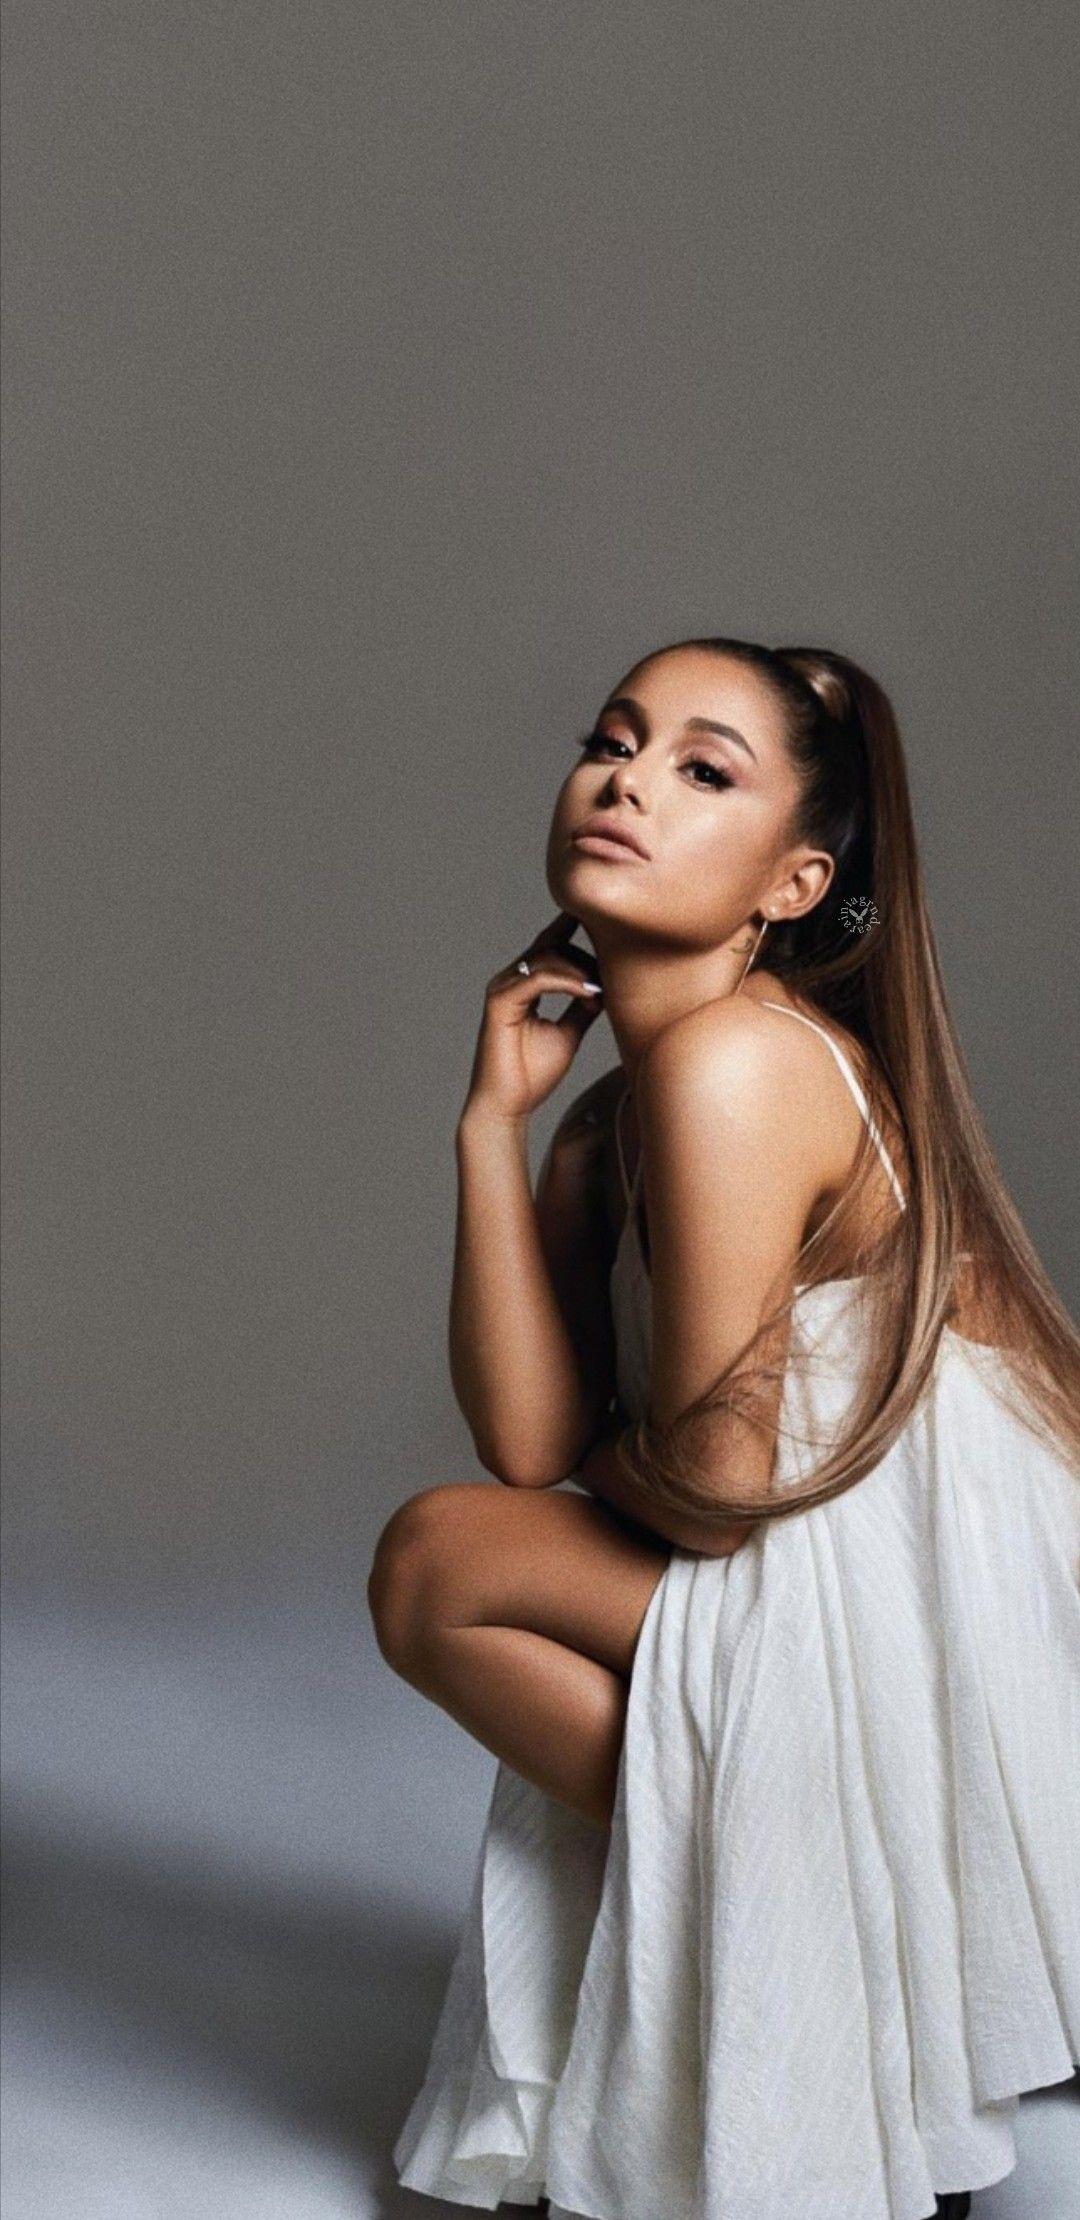 Ariana Grande 2019 Wallpaper